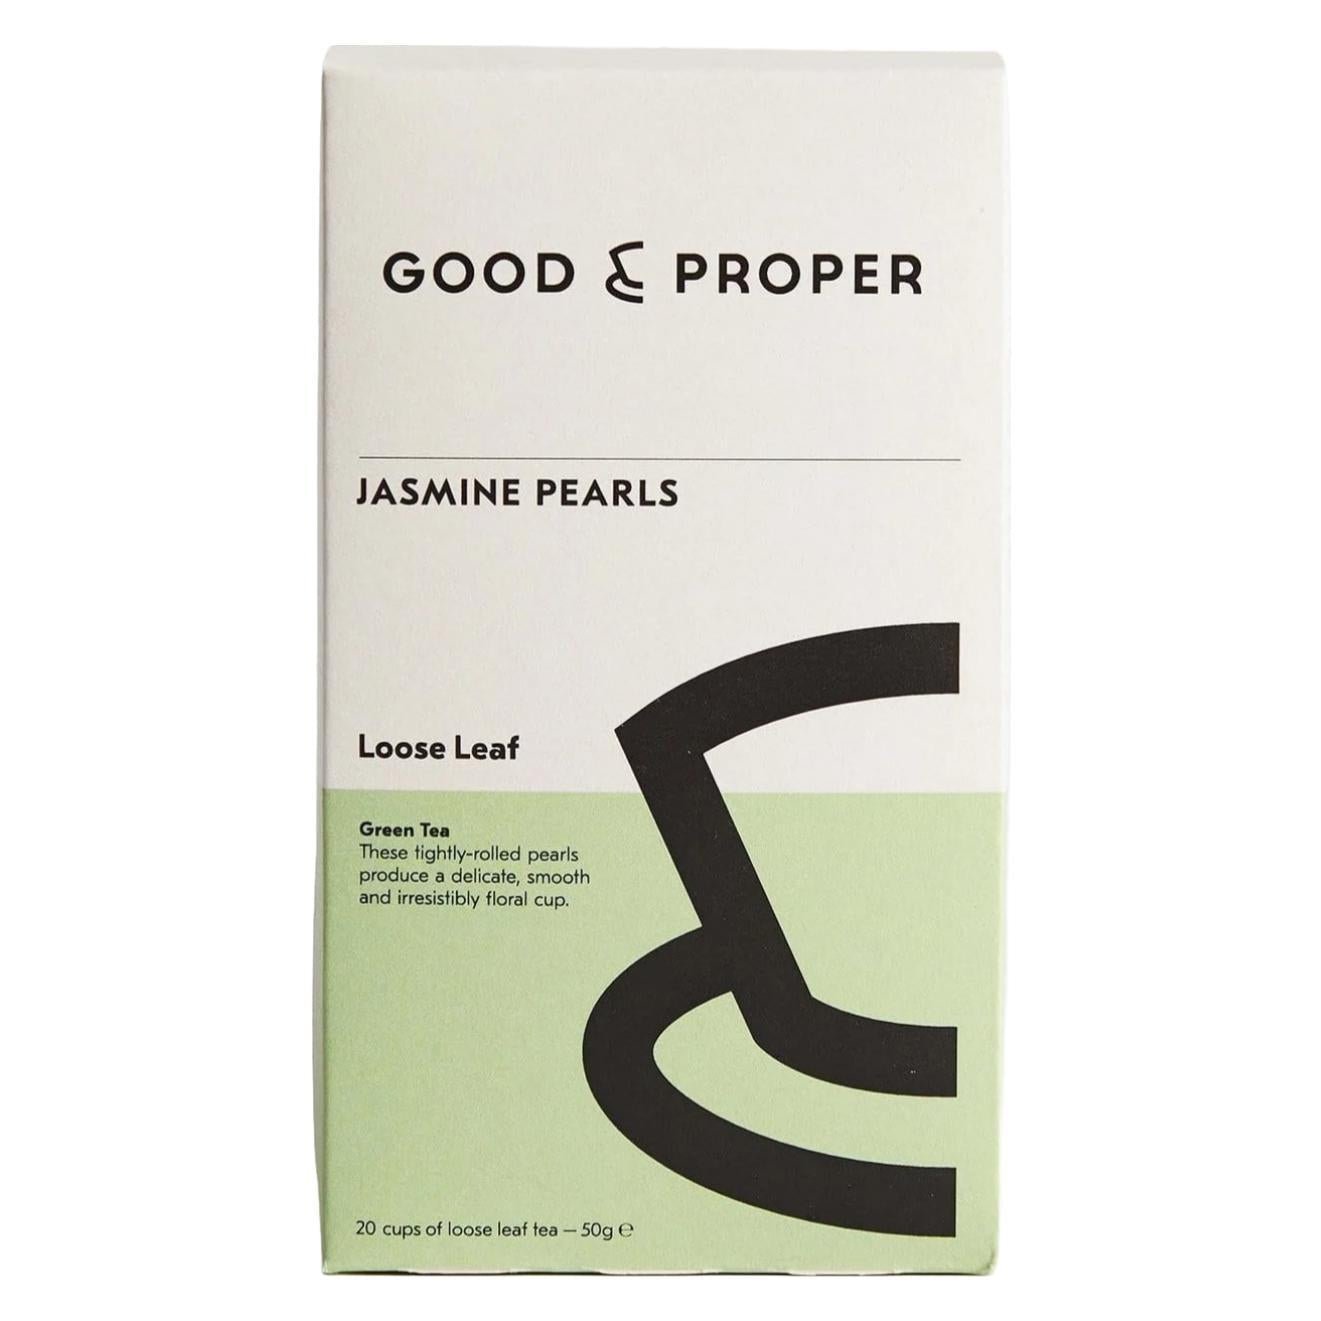 Good & Proper Tea - Jasmine Pearls Loose-Leaf Black Tea (50G | 20 Cups) - The Epicurean Trader